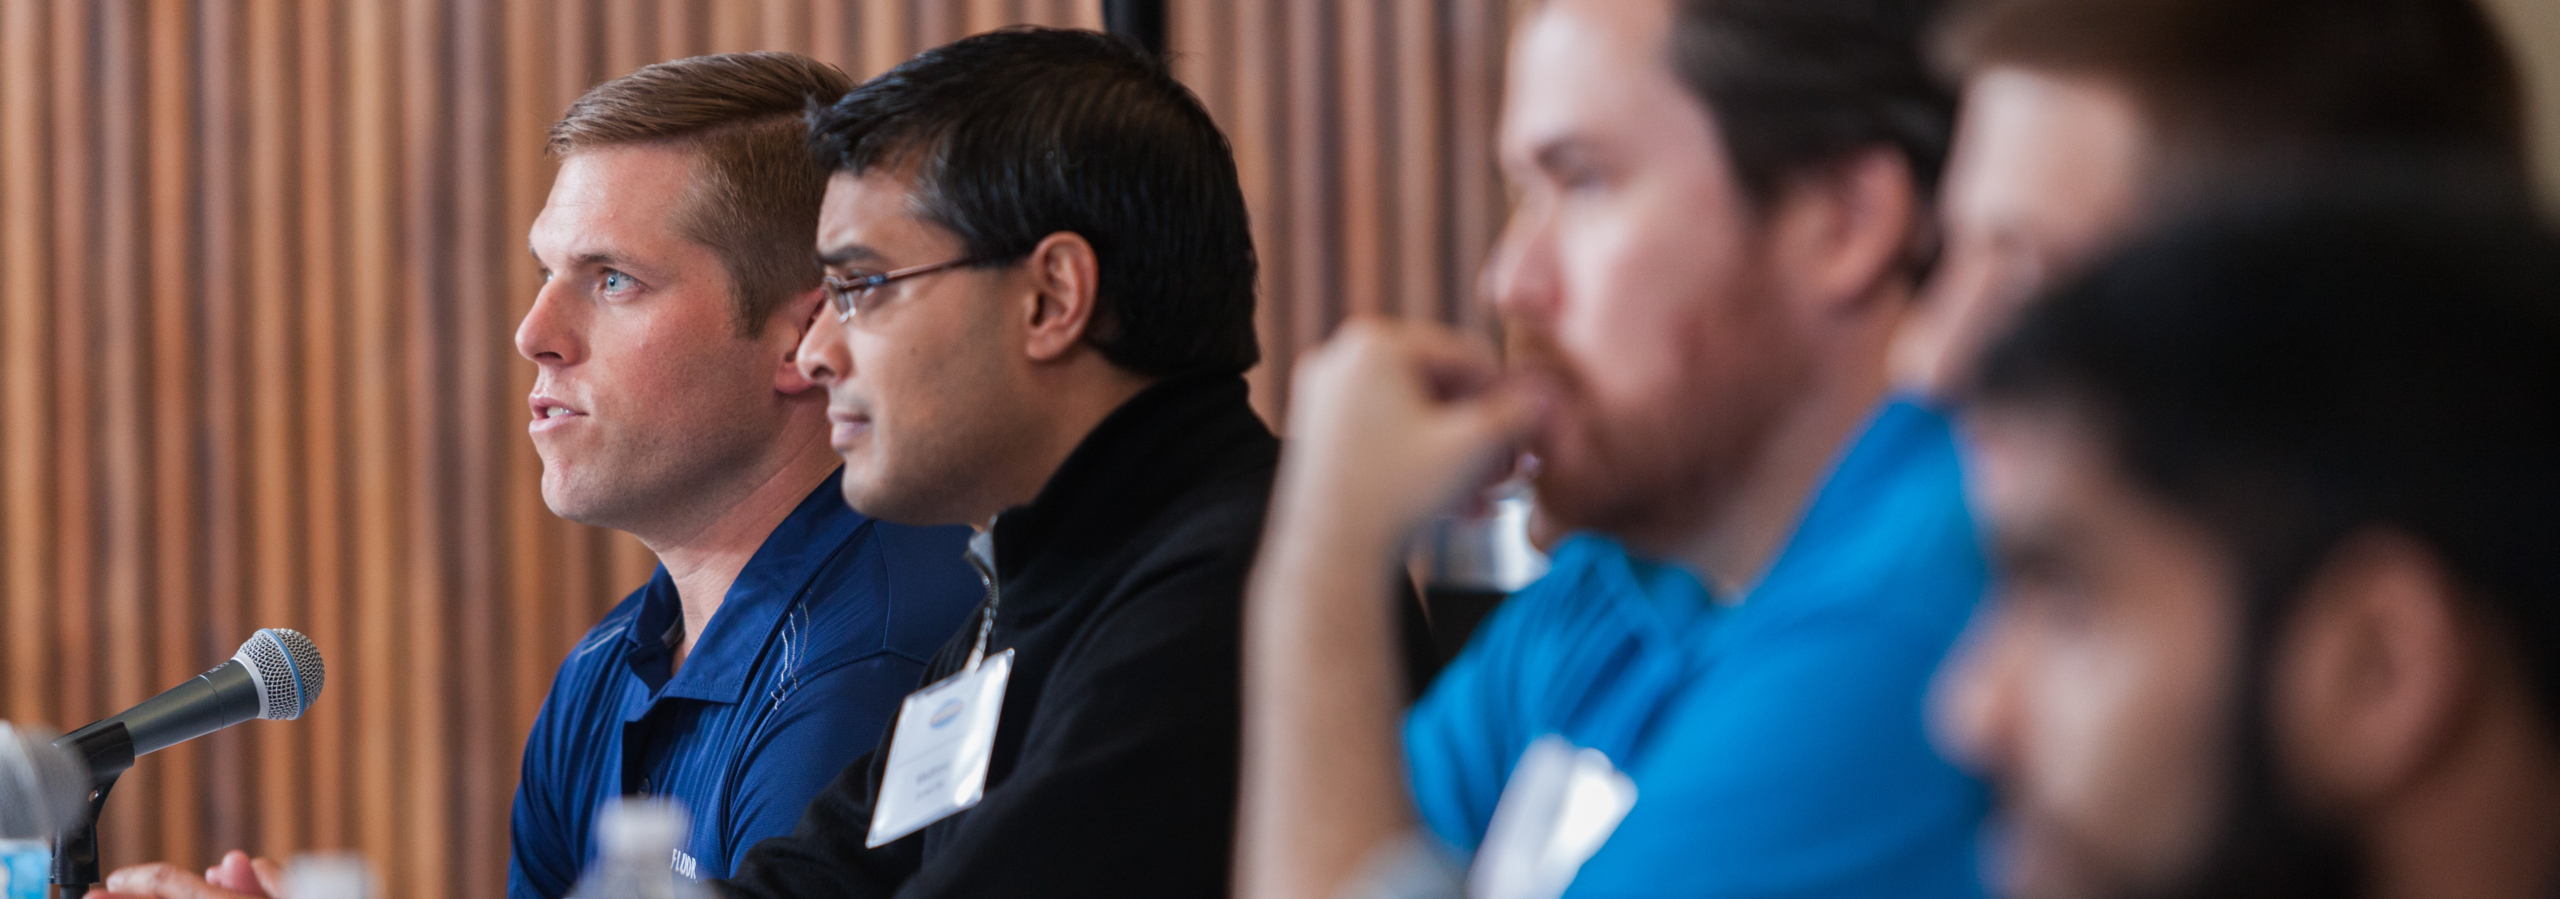 Industry representatives speak at a career event at Duke University